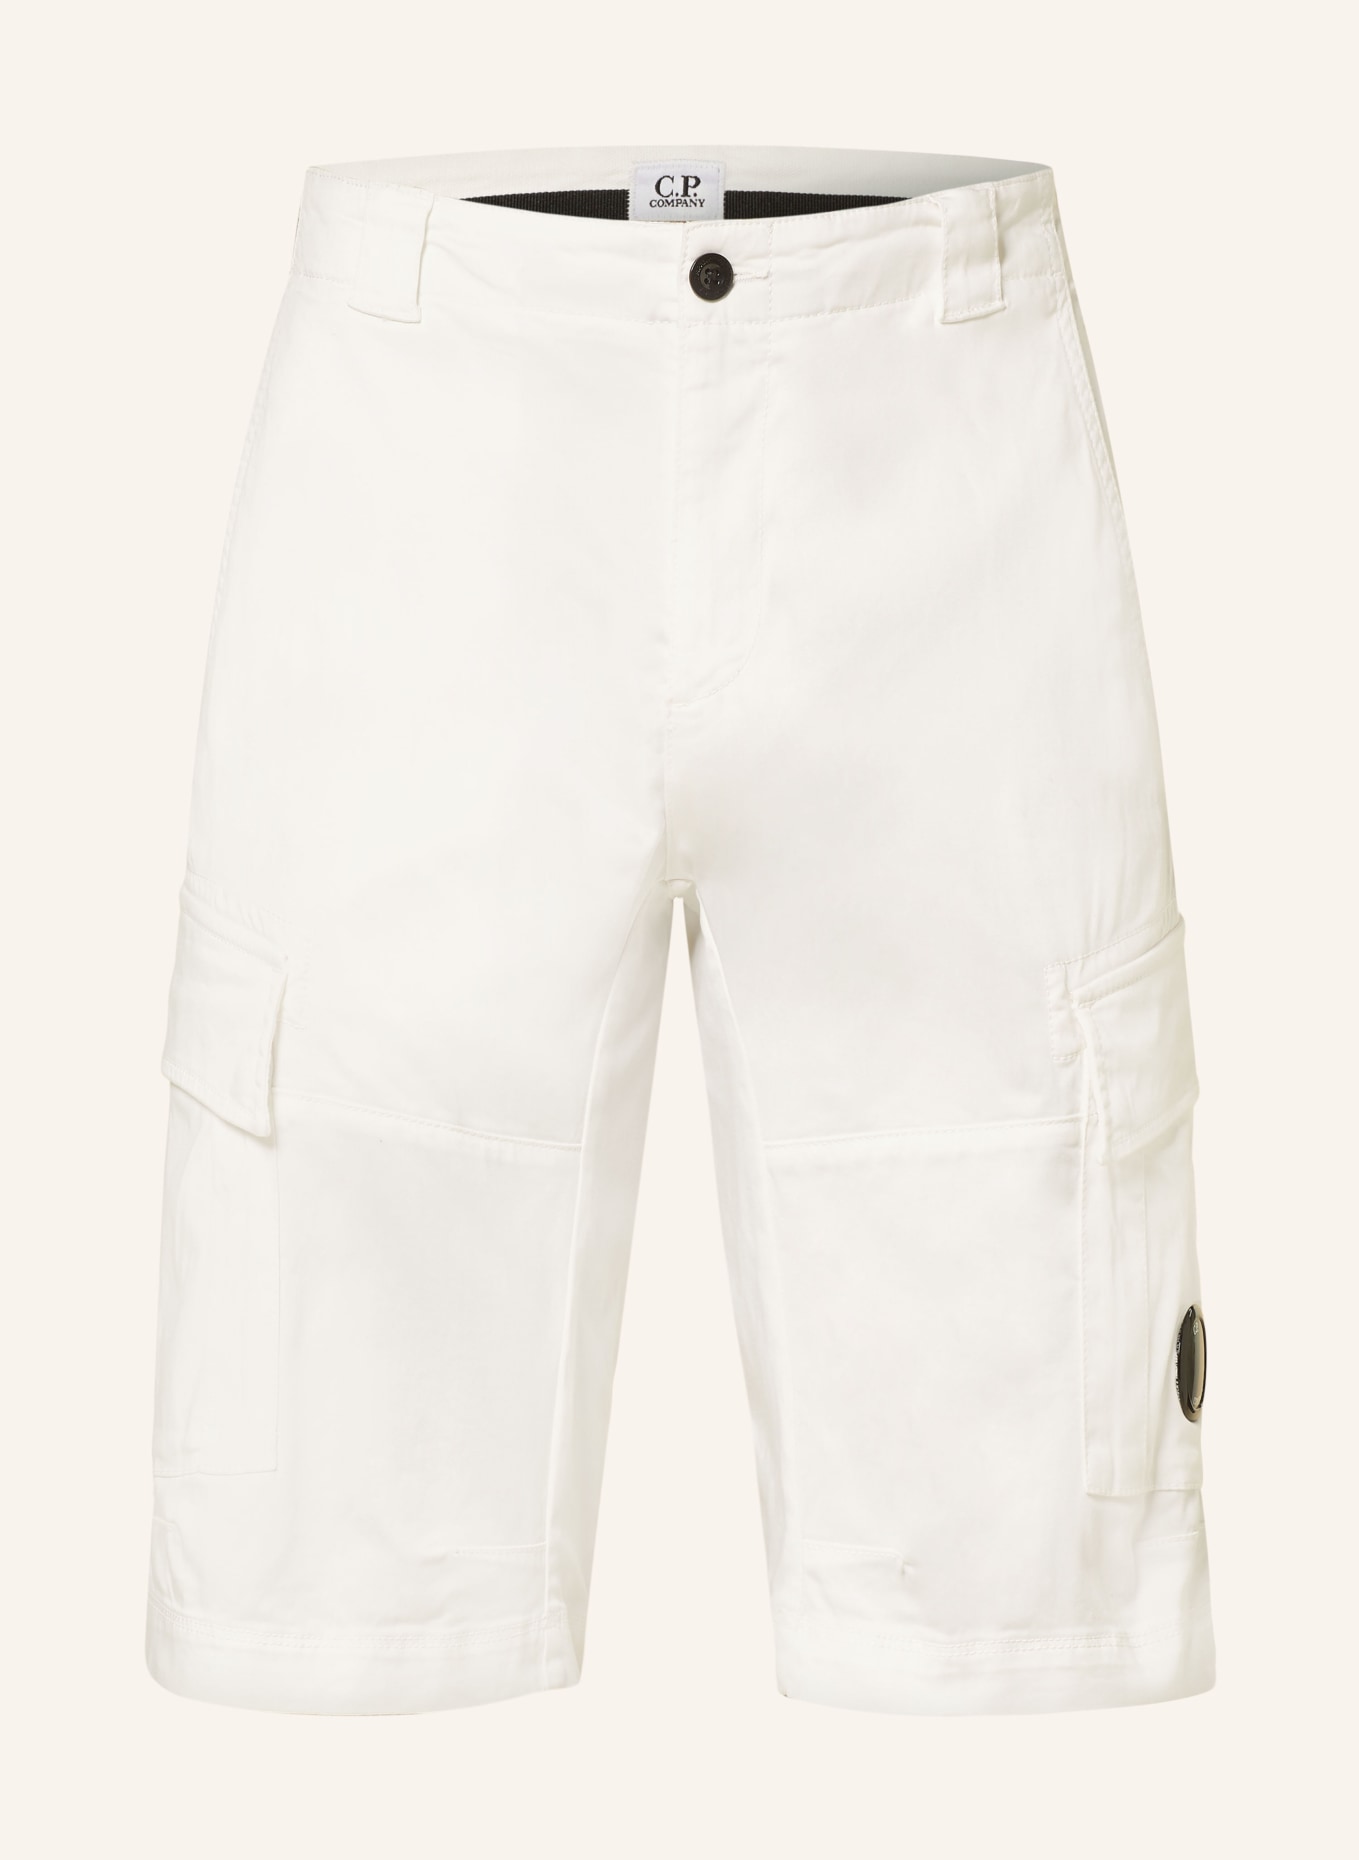 C.P. COMPANY Cargo shorts, Color: WHITE (Image 1)